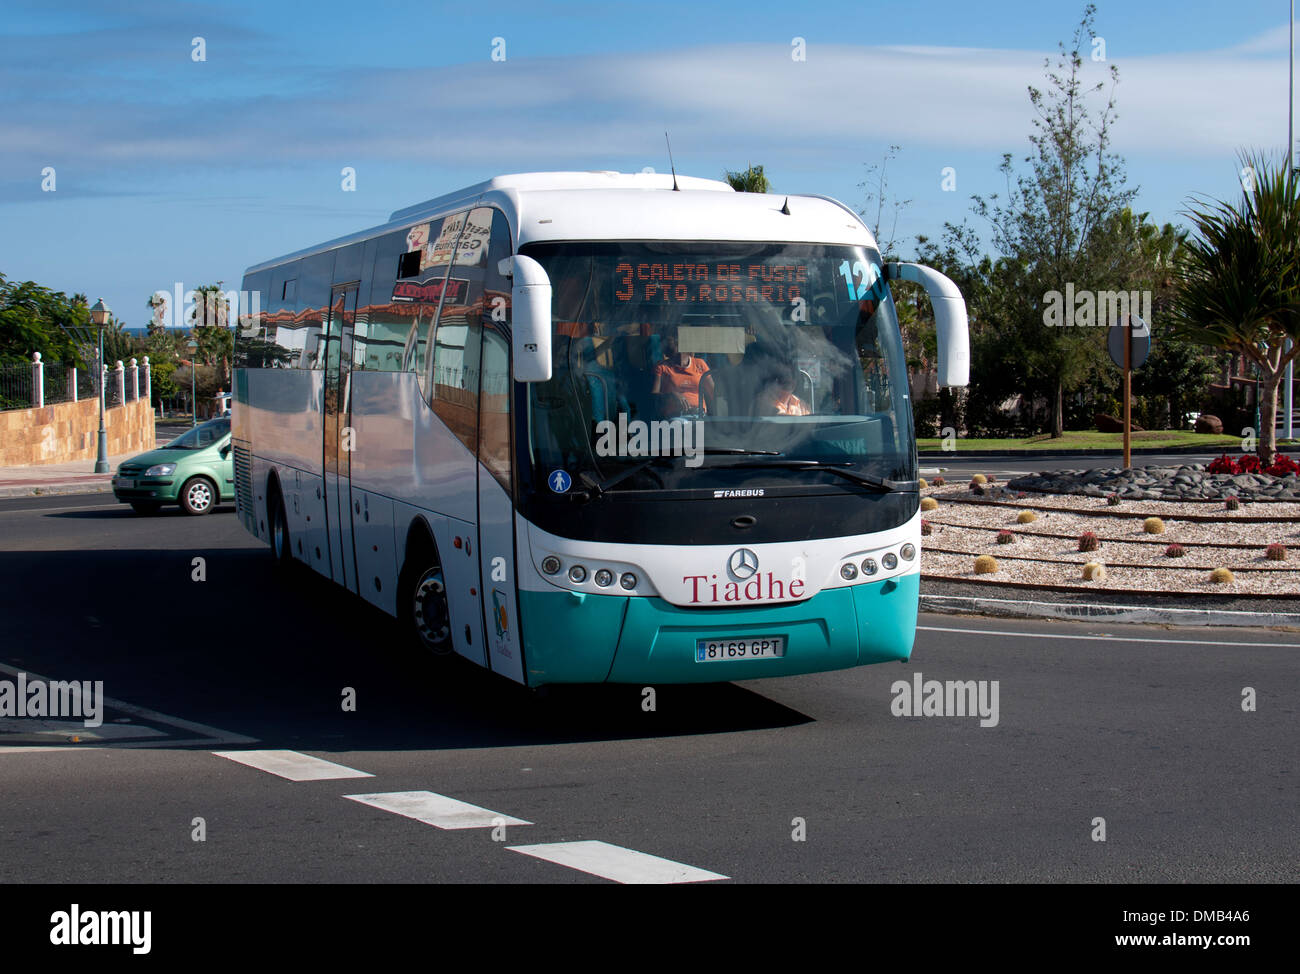 Autobuses Tiadhe, Caleta de Fuste, Fuerteventura, Islas Canarias, España  Fotografía de stock - Alamy